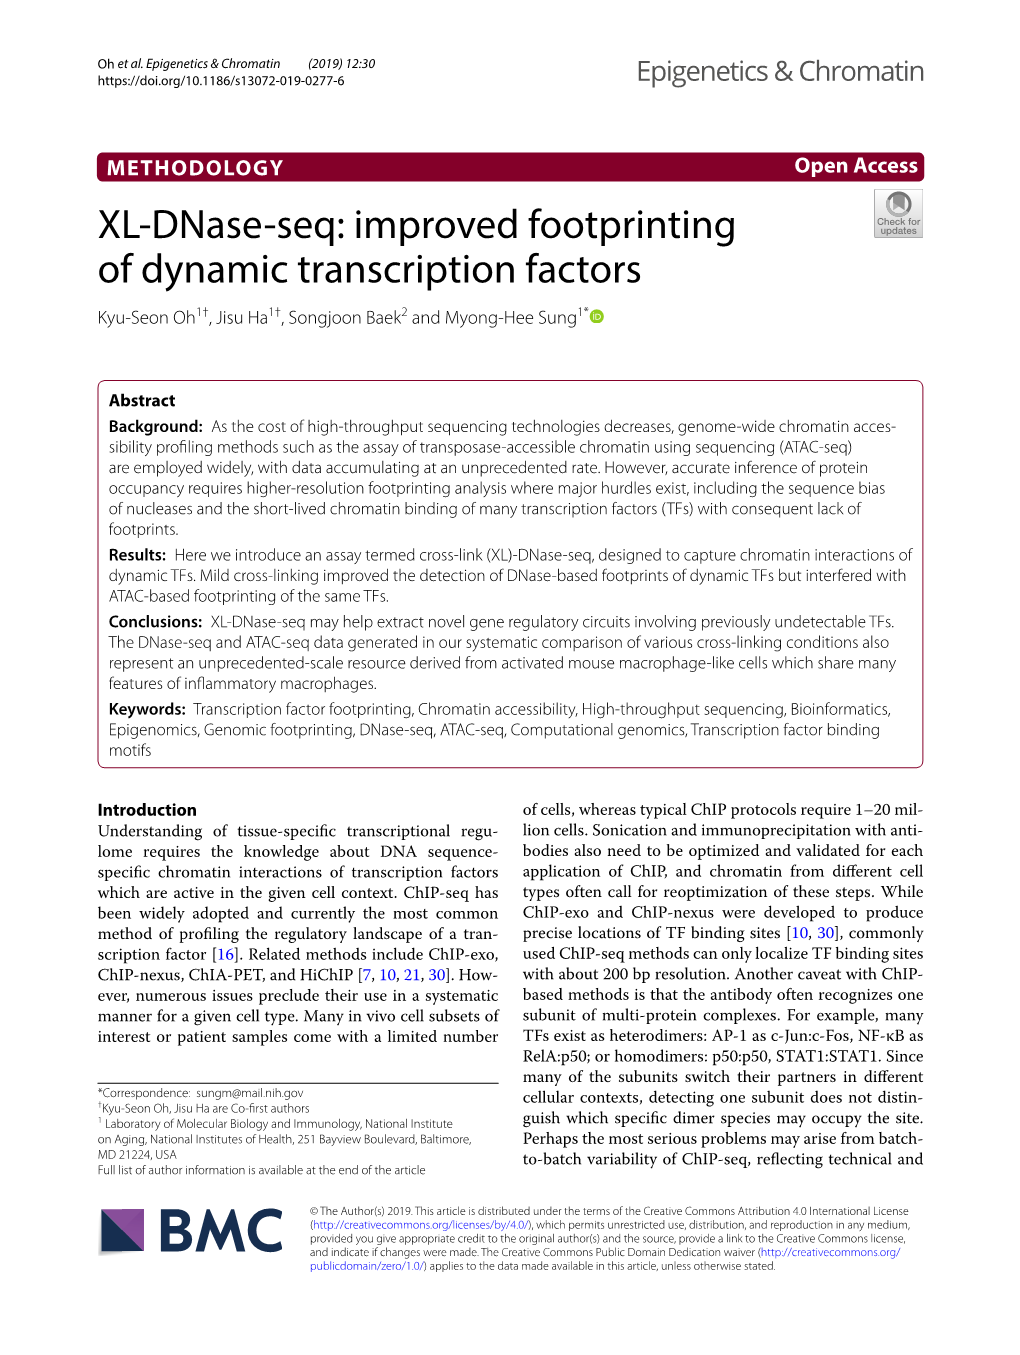 XL-Dnase-Seq: Improved Footprinting of Dynamic Transcription Factors